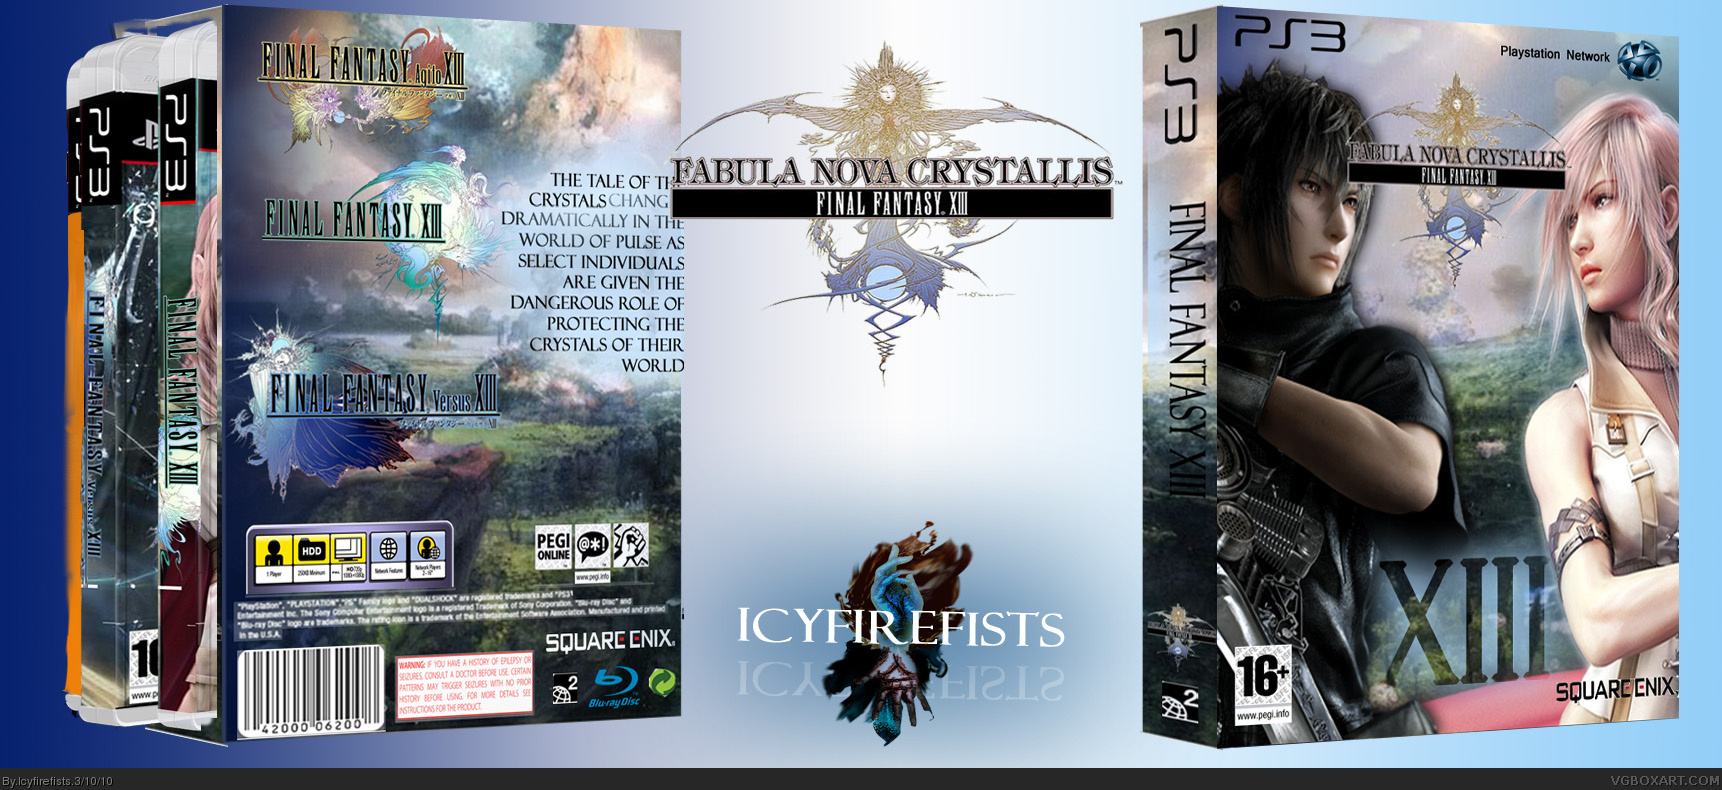 Final Fantasy XIII - Fabula Nova Crystallis box cover